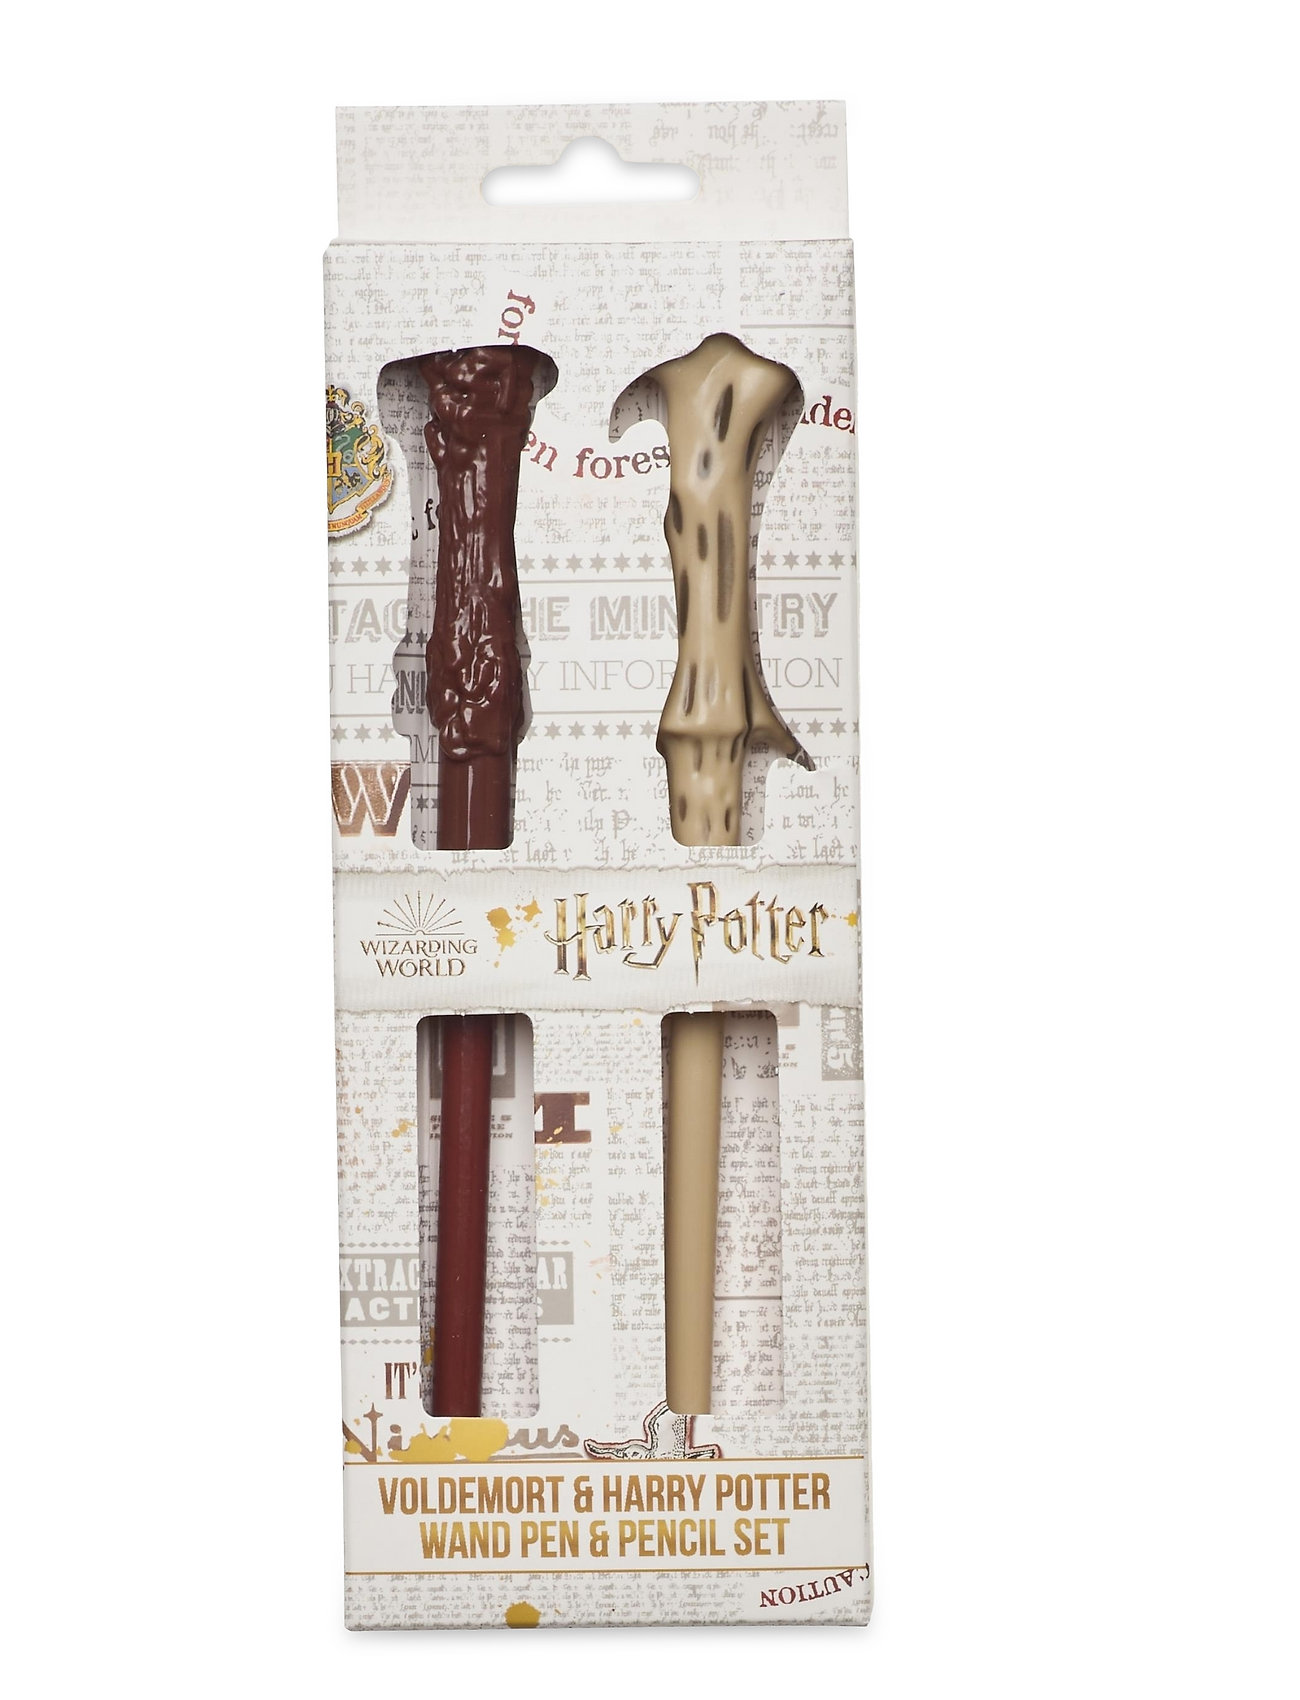 Harry Potter, Wand Pen & Pencil Set Toys Creativity Drawing & Crafts Drawing Stati Ry Röd Harry Potter